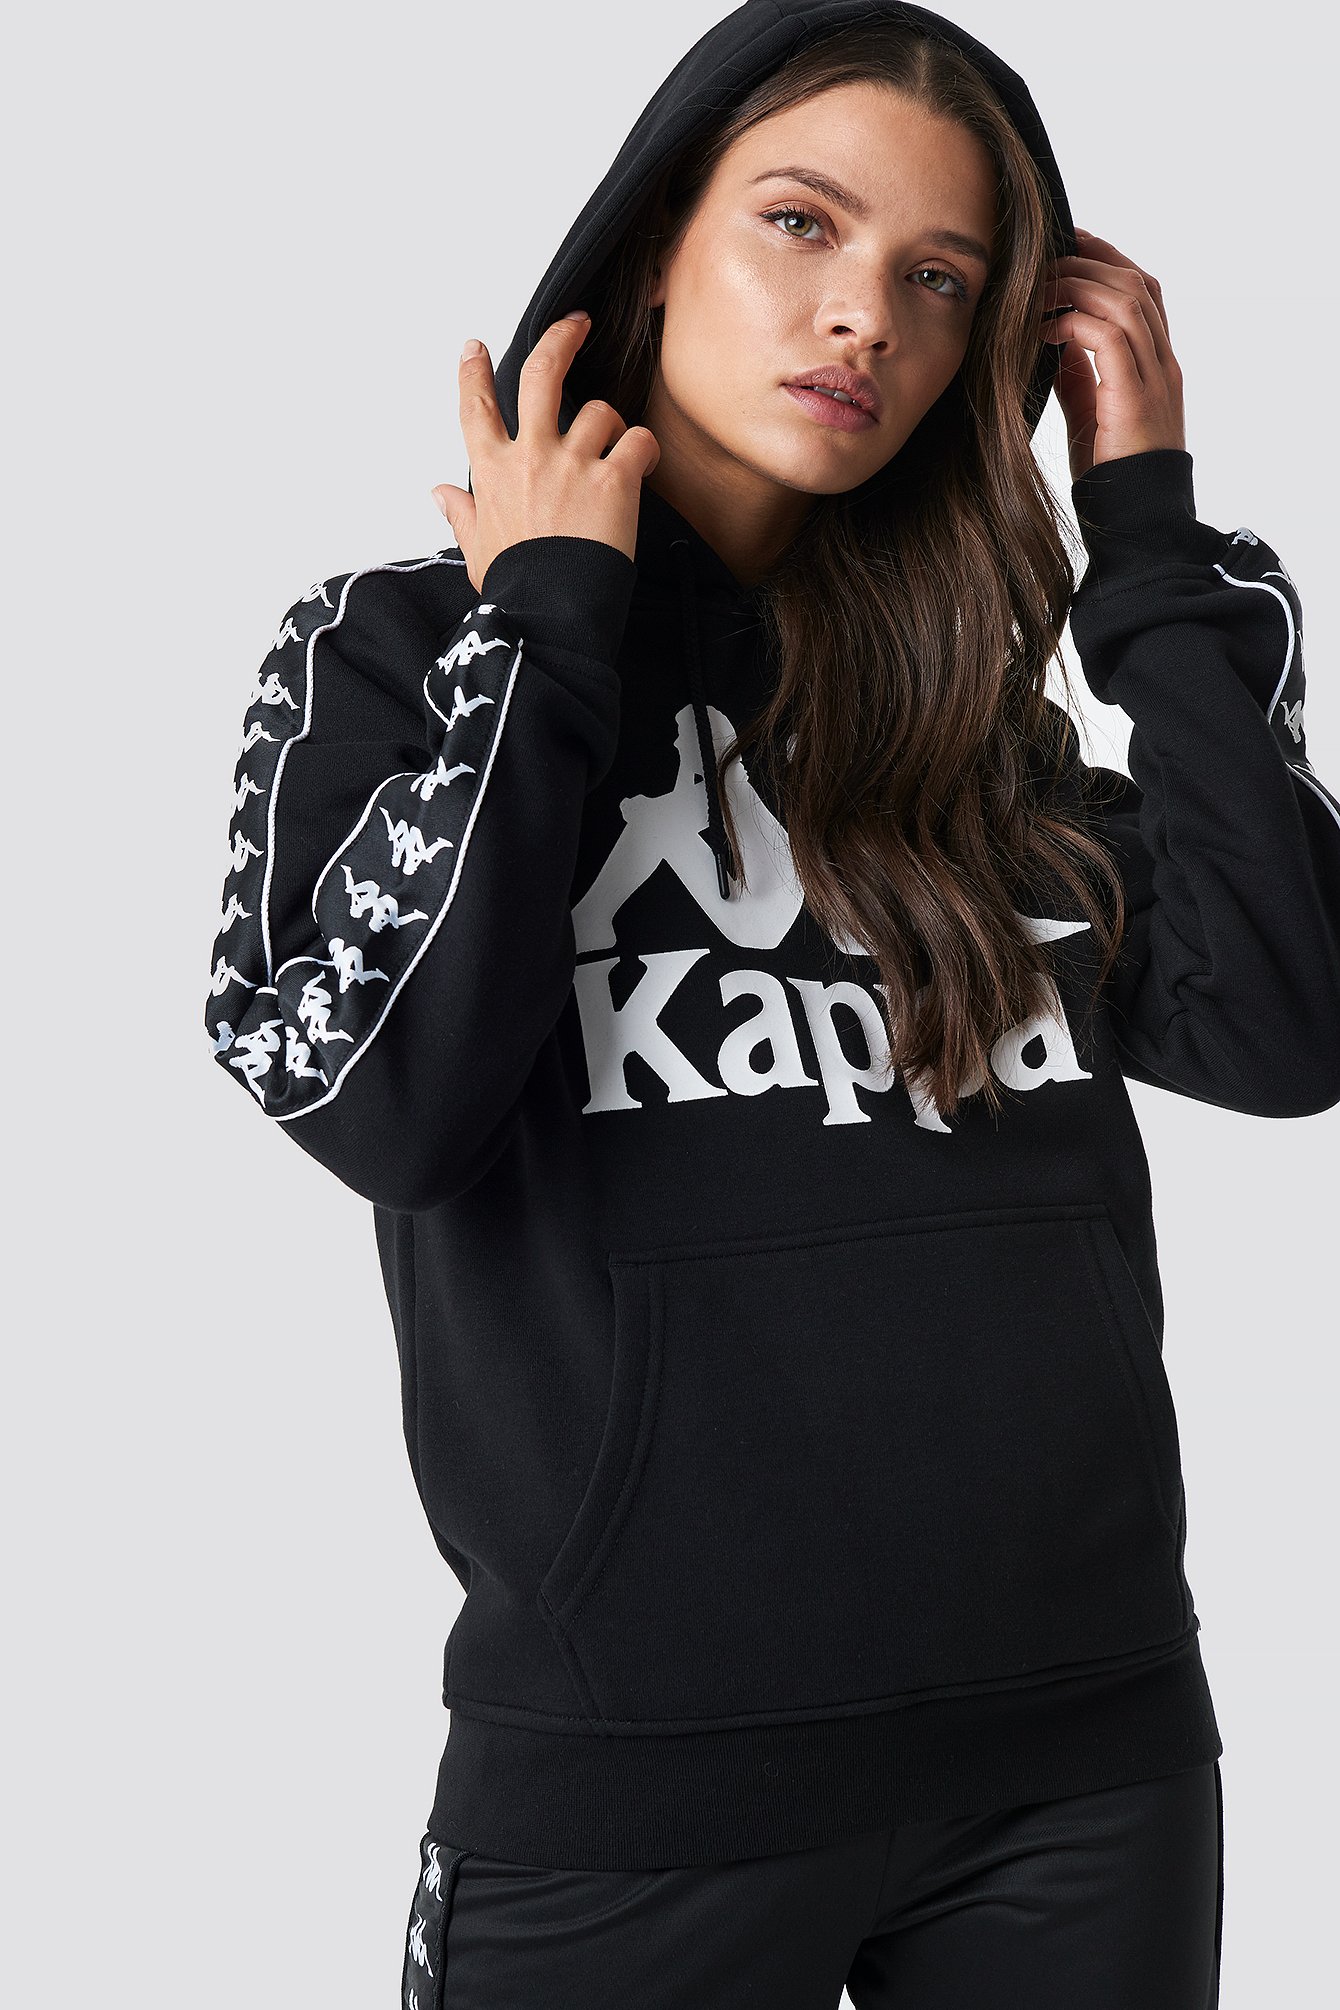 black kappa sweater